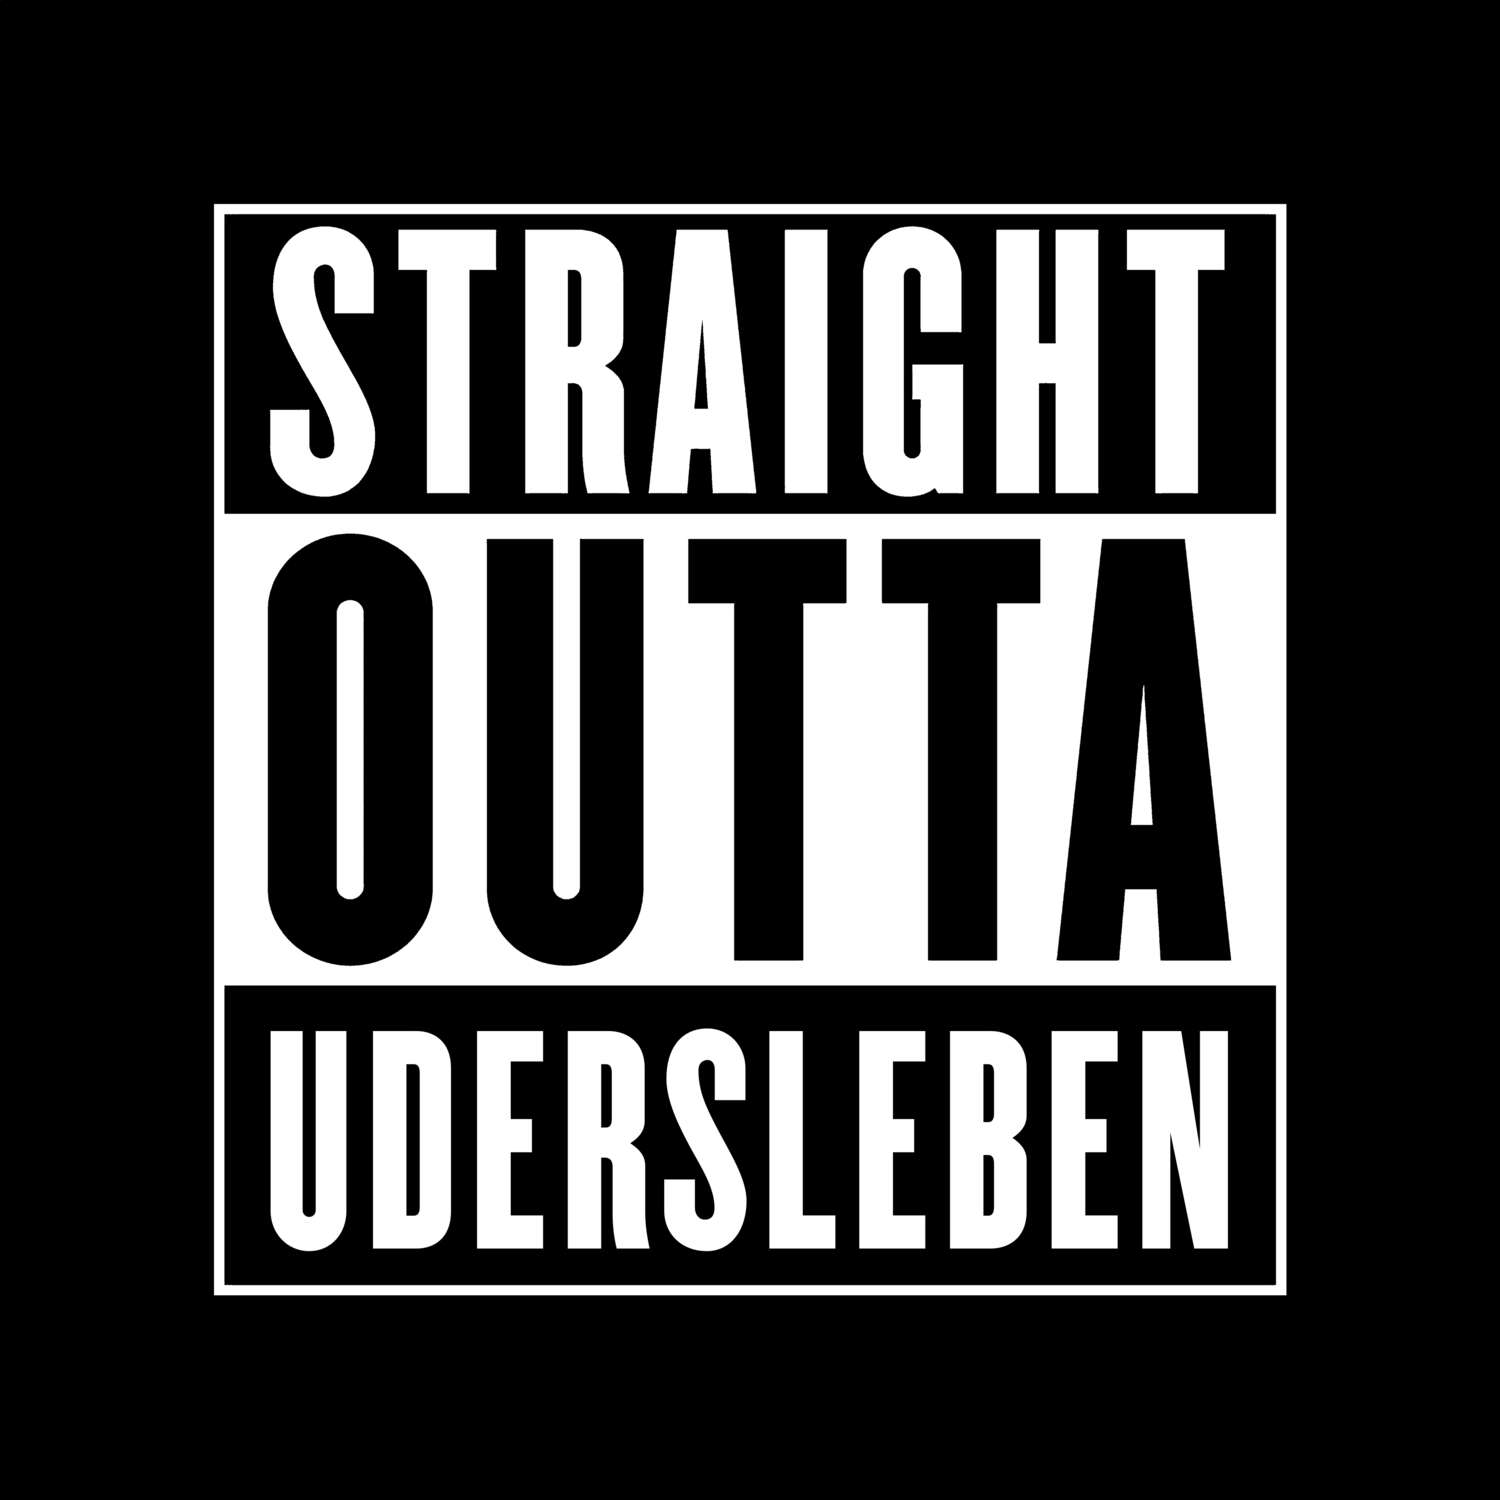 Udersleben T-Shirt »Straight Outta«